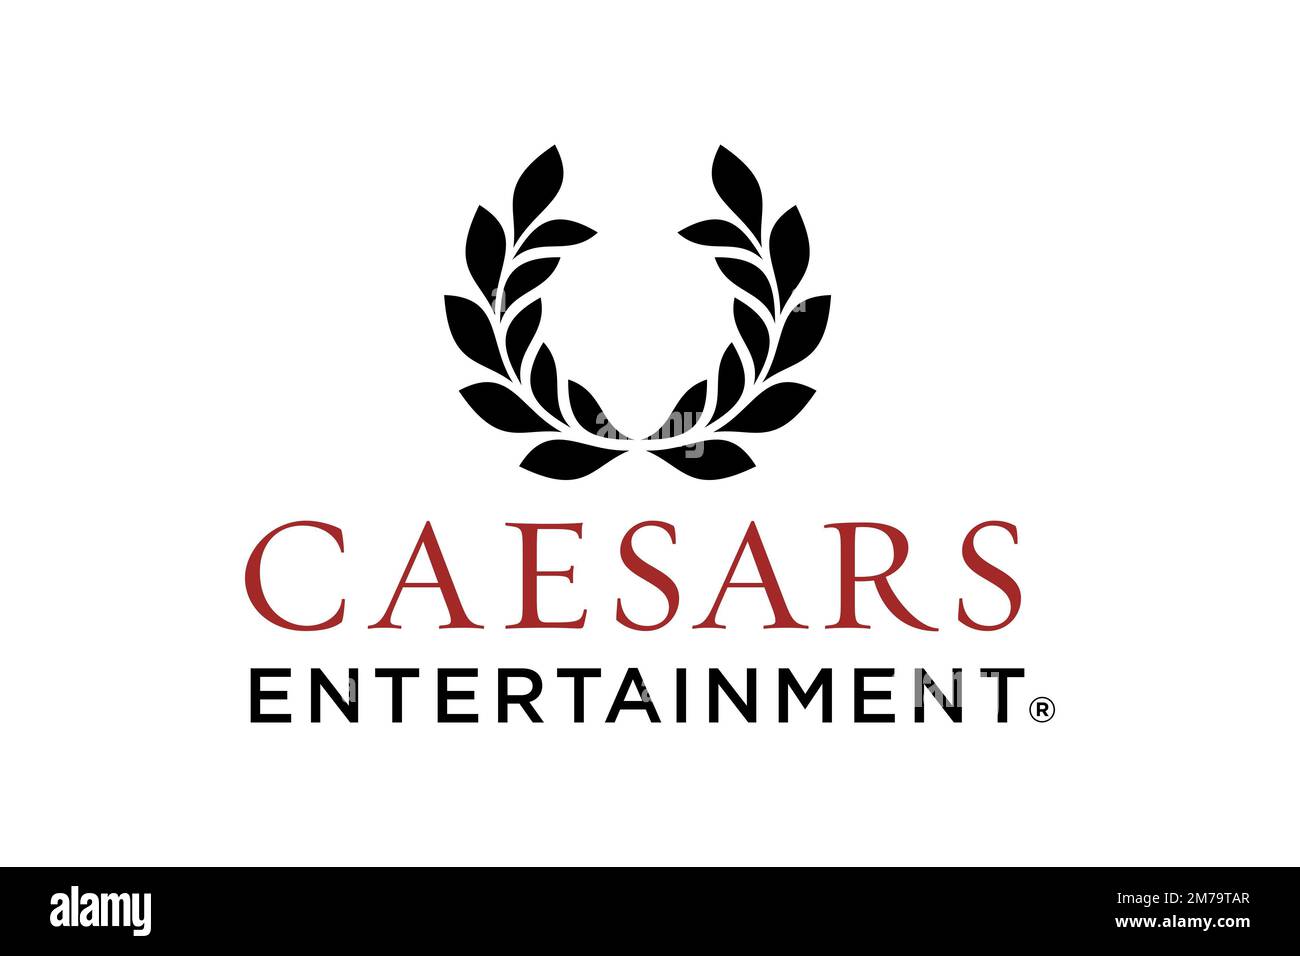 Caesars Entertainment Company, Corporation Caesars Entertainment Company, Corporation, Logo, sfondo bianco Foto Stock